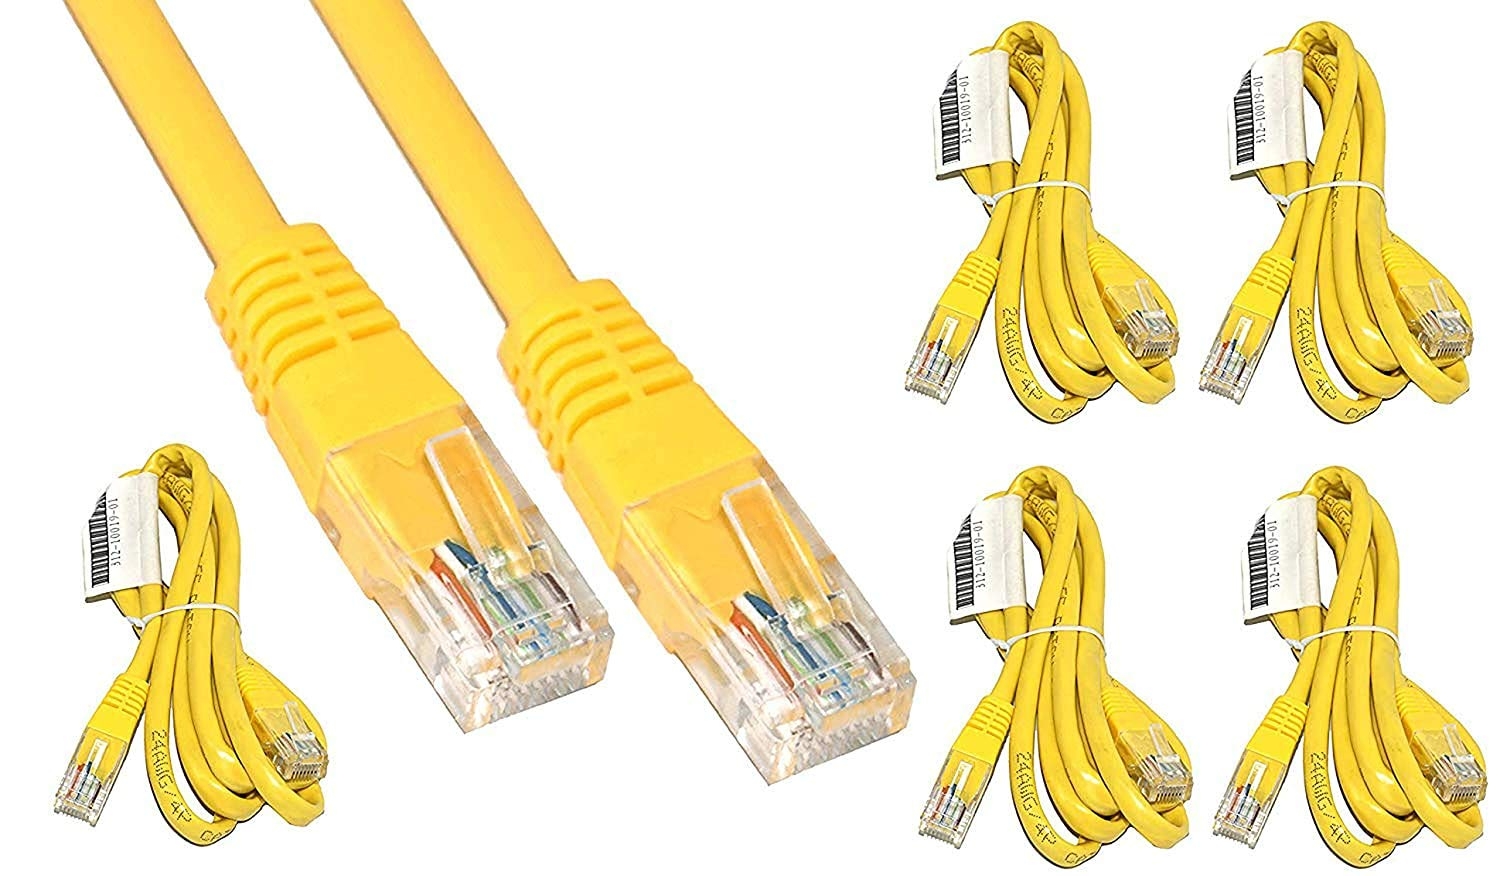 1.5 Meter RJ45 Cat-5e Network Ethernet LAN Patch Cable (Yellow) - 5 pcs